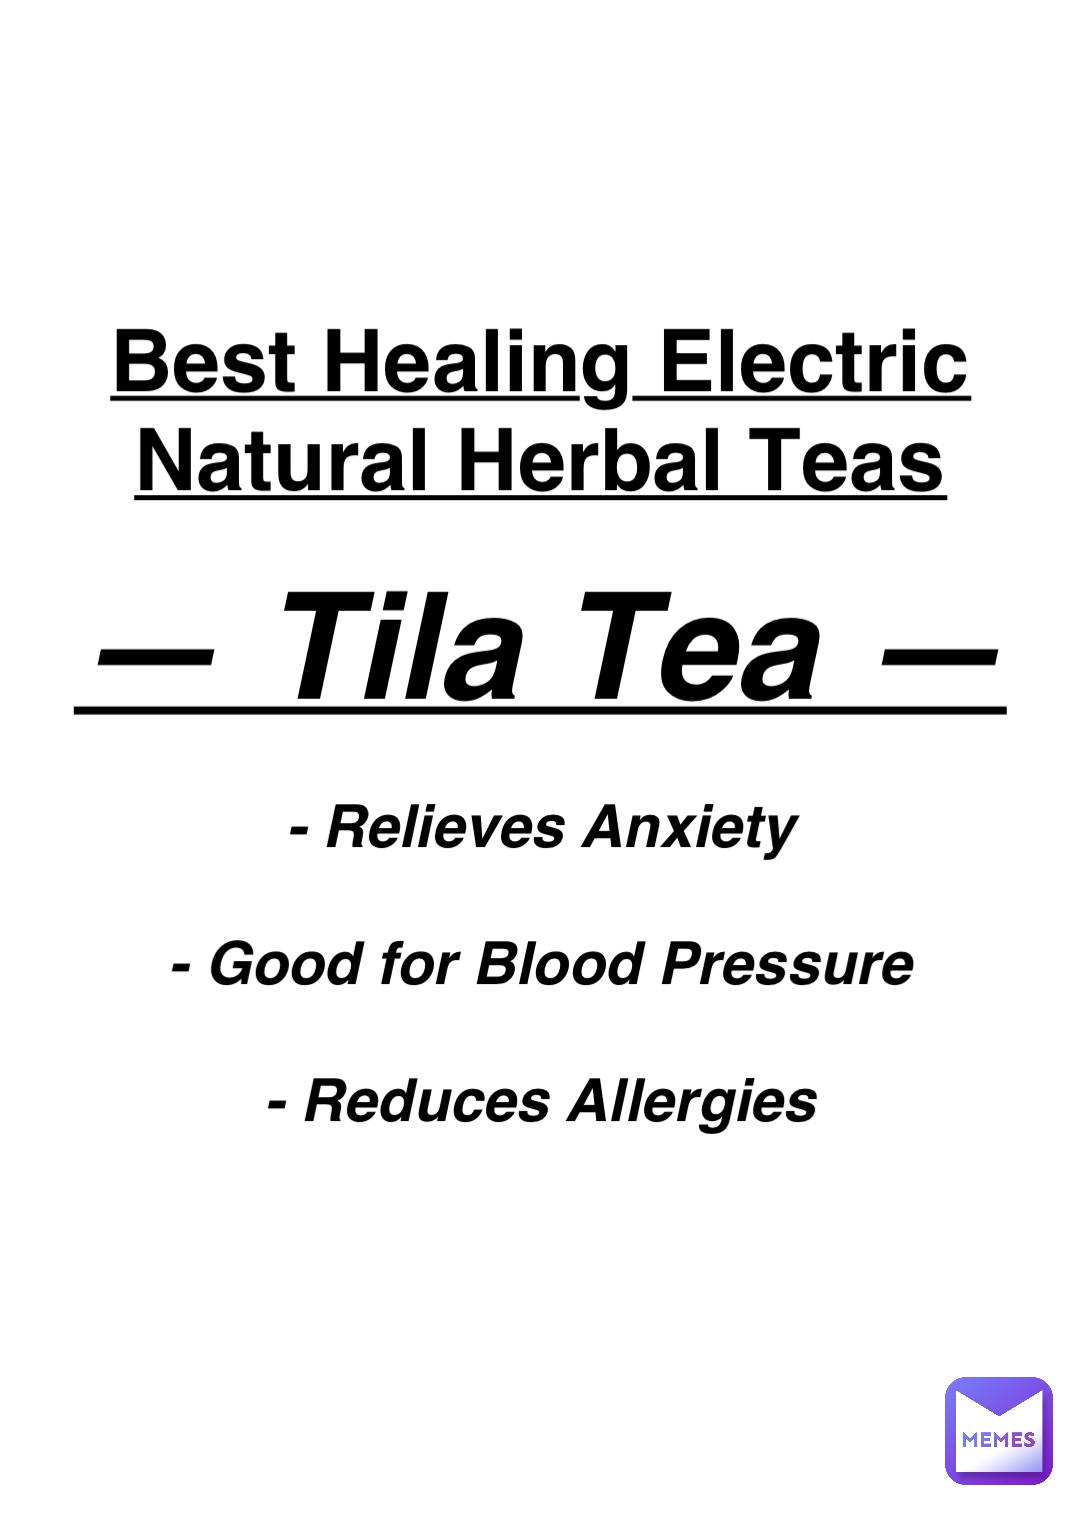 Double tap to edit Best Healing Electric Natural Herbal Teas — Tila Tea ...